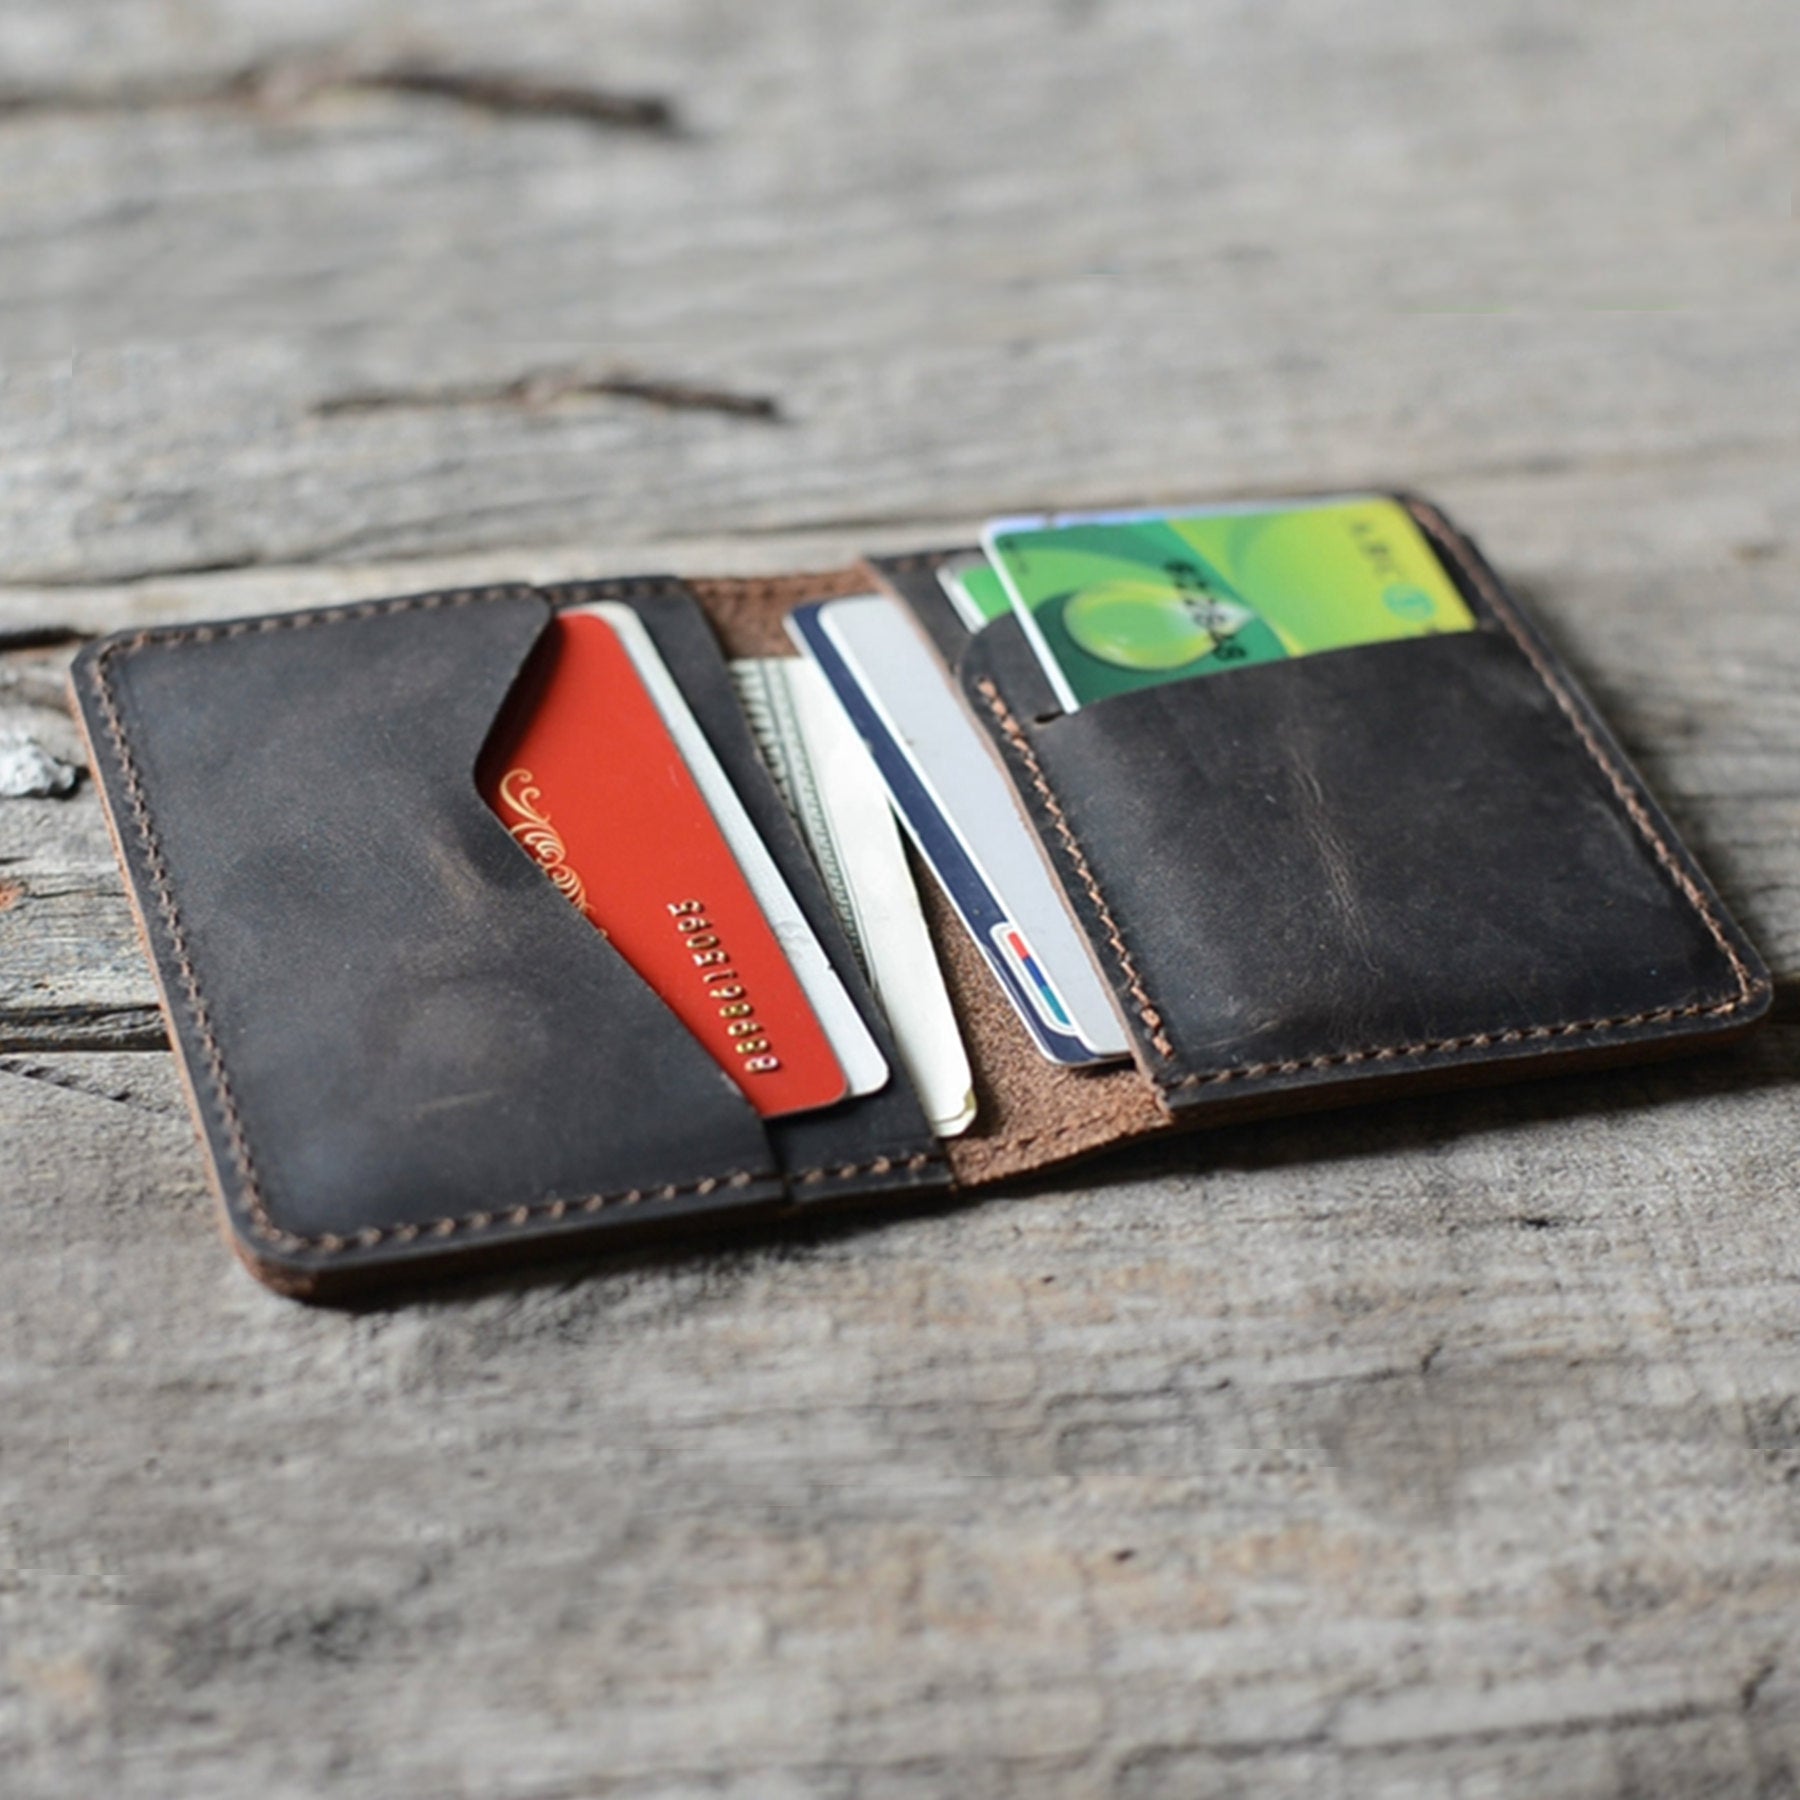 Personalized Large Leather Travel Wallet, iPad Pro Holder